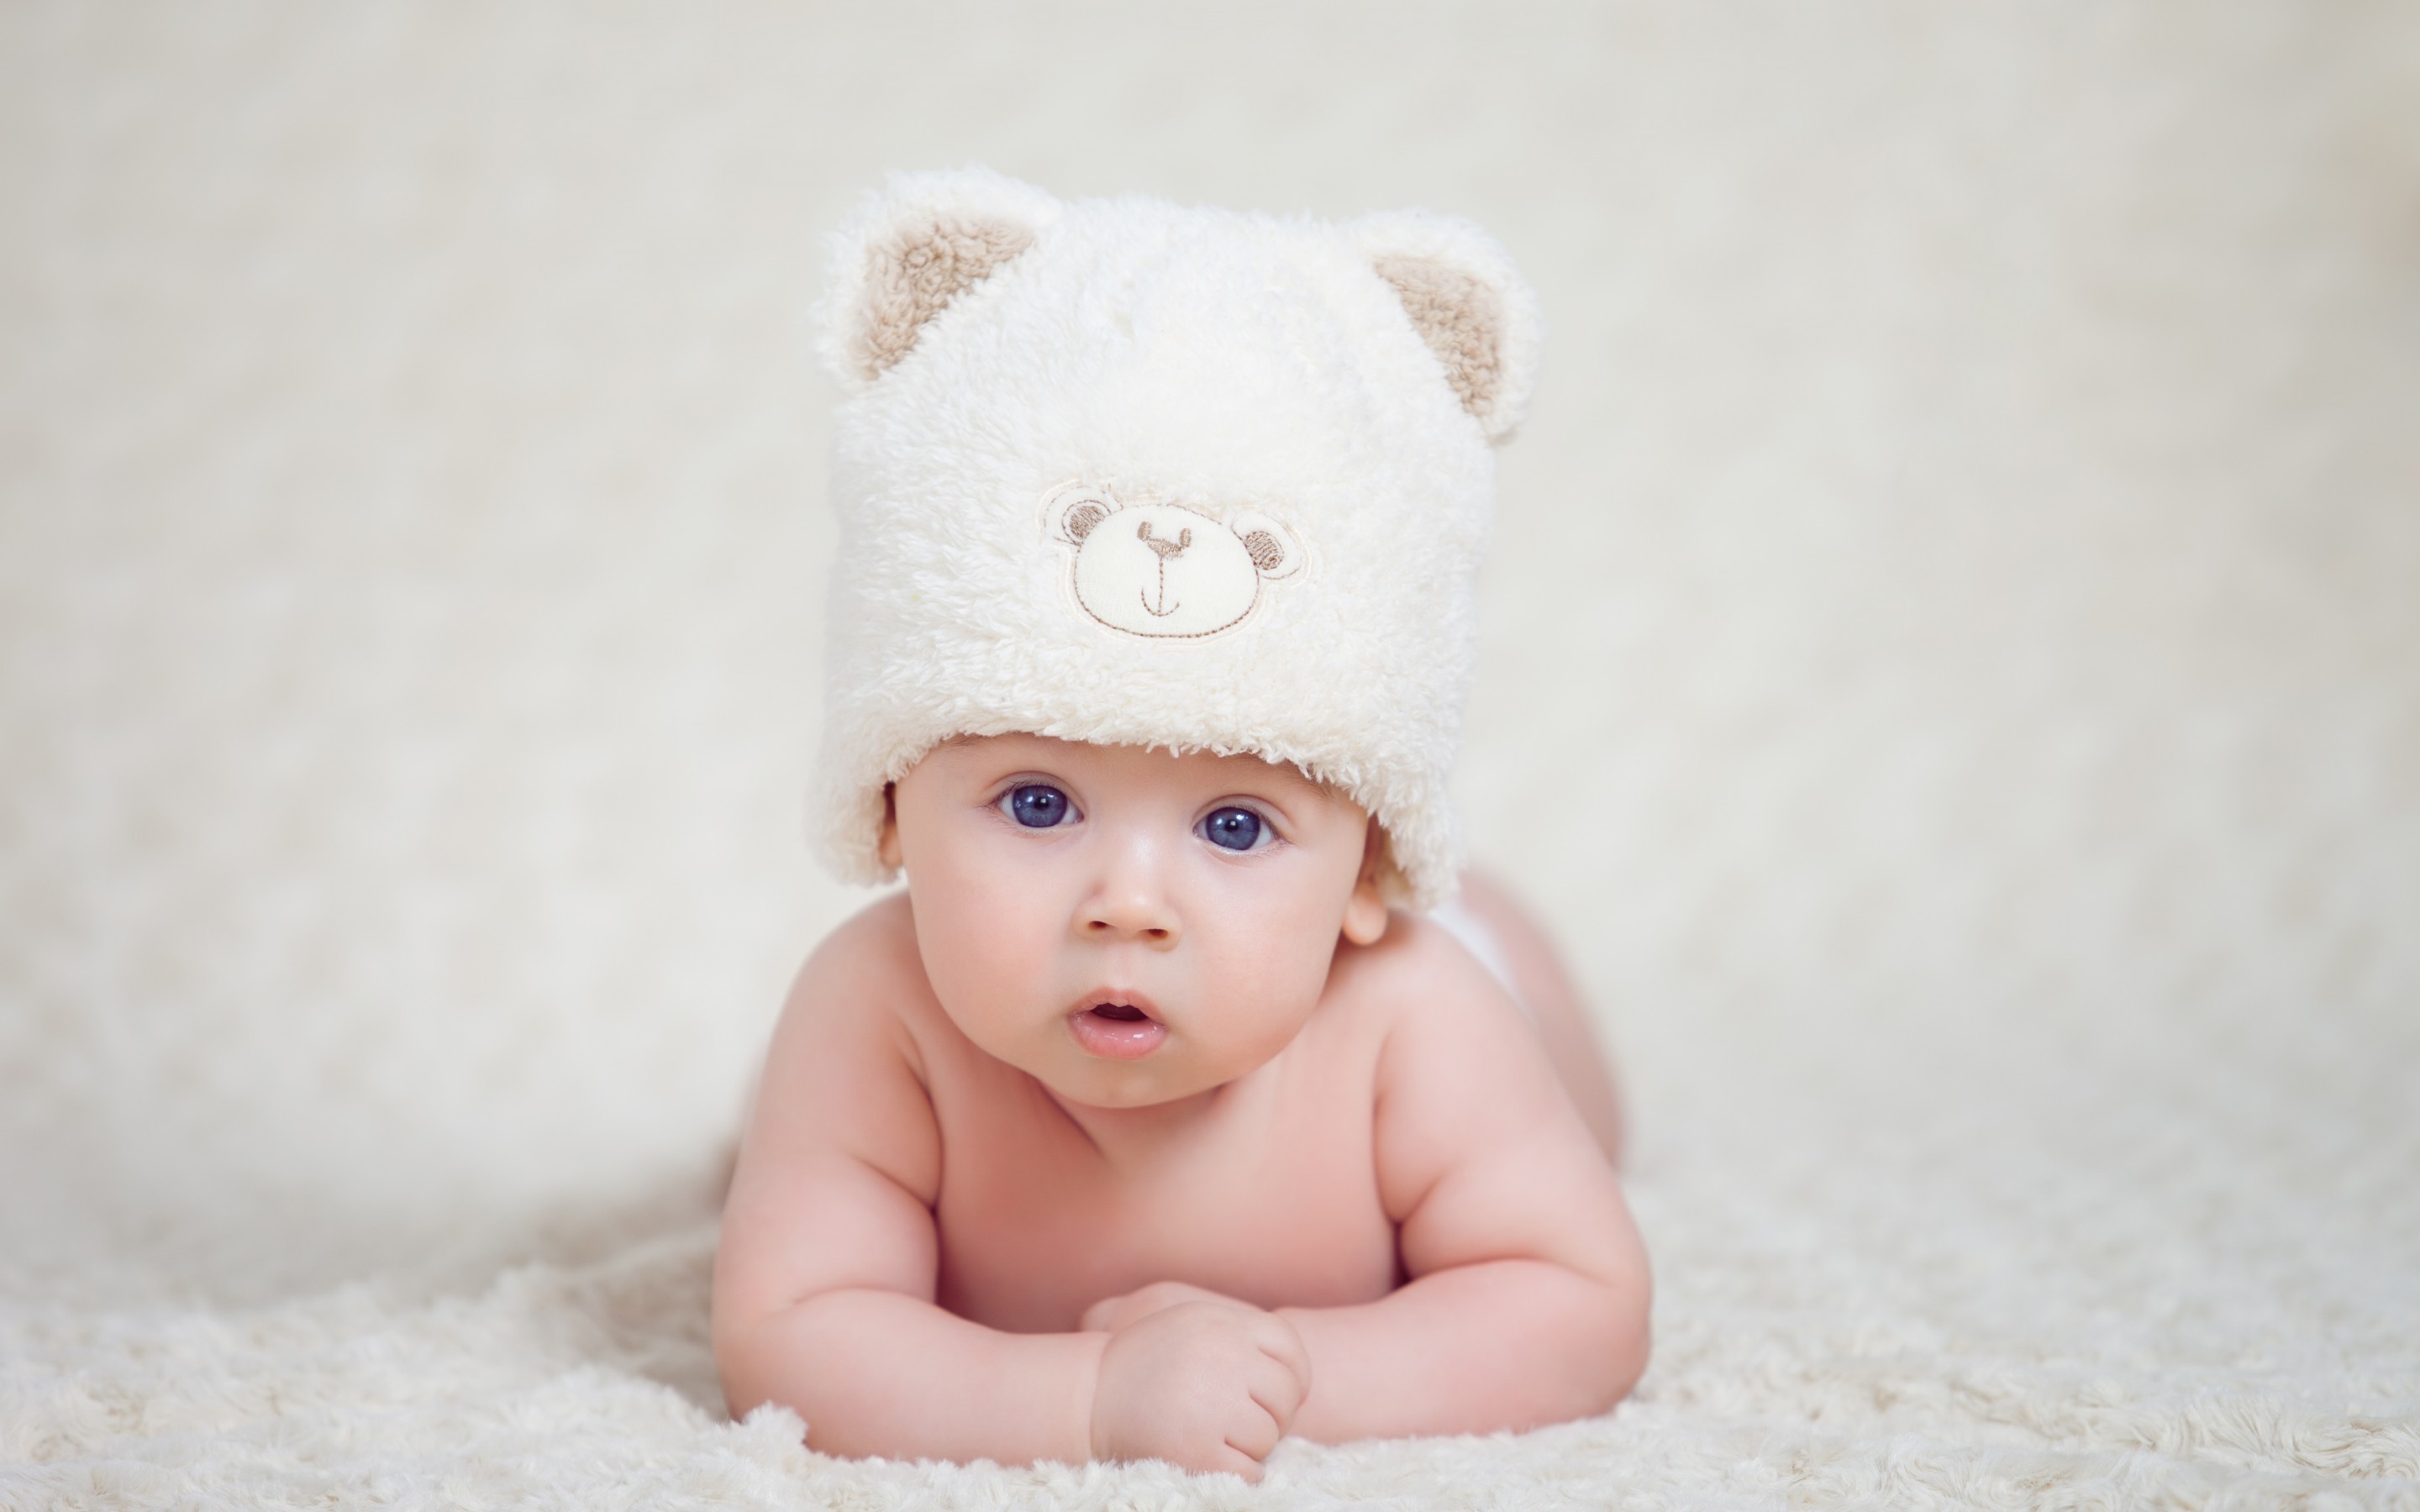 2880x1800 baby boy with big blue eyes lying on white carpet photography cute boy  wallpaper full hd